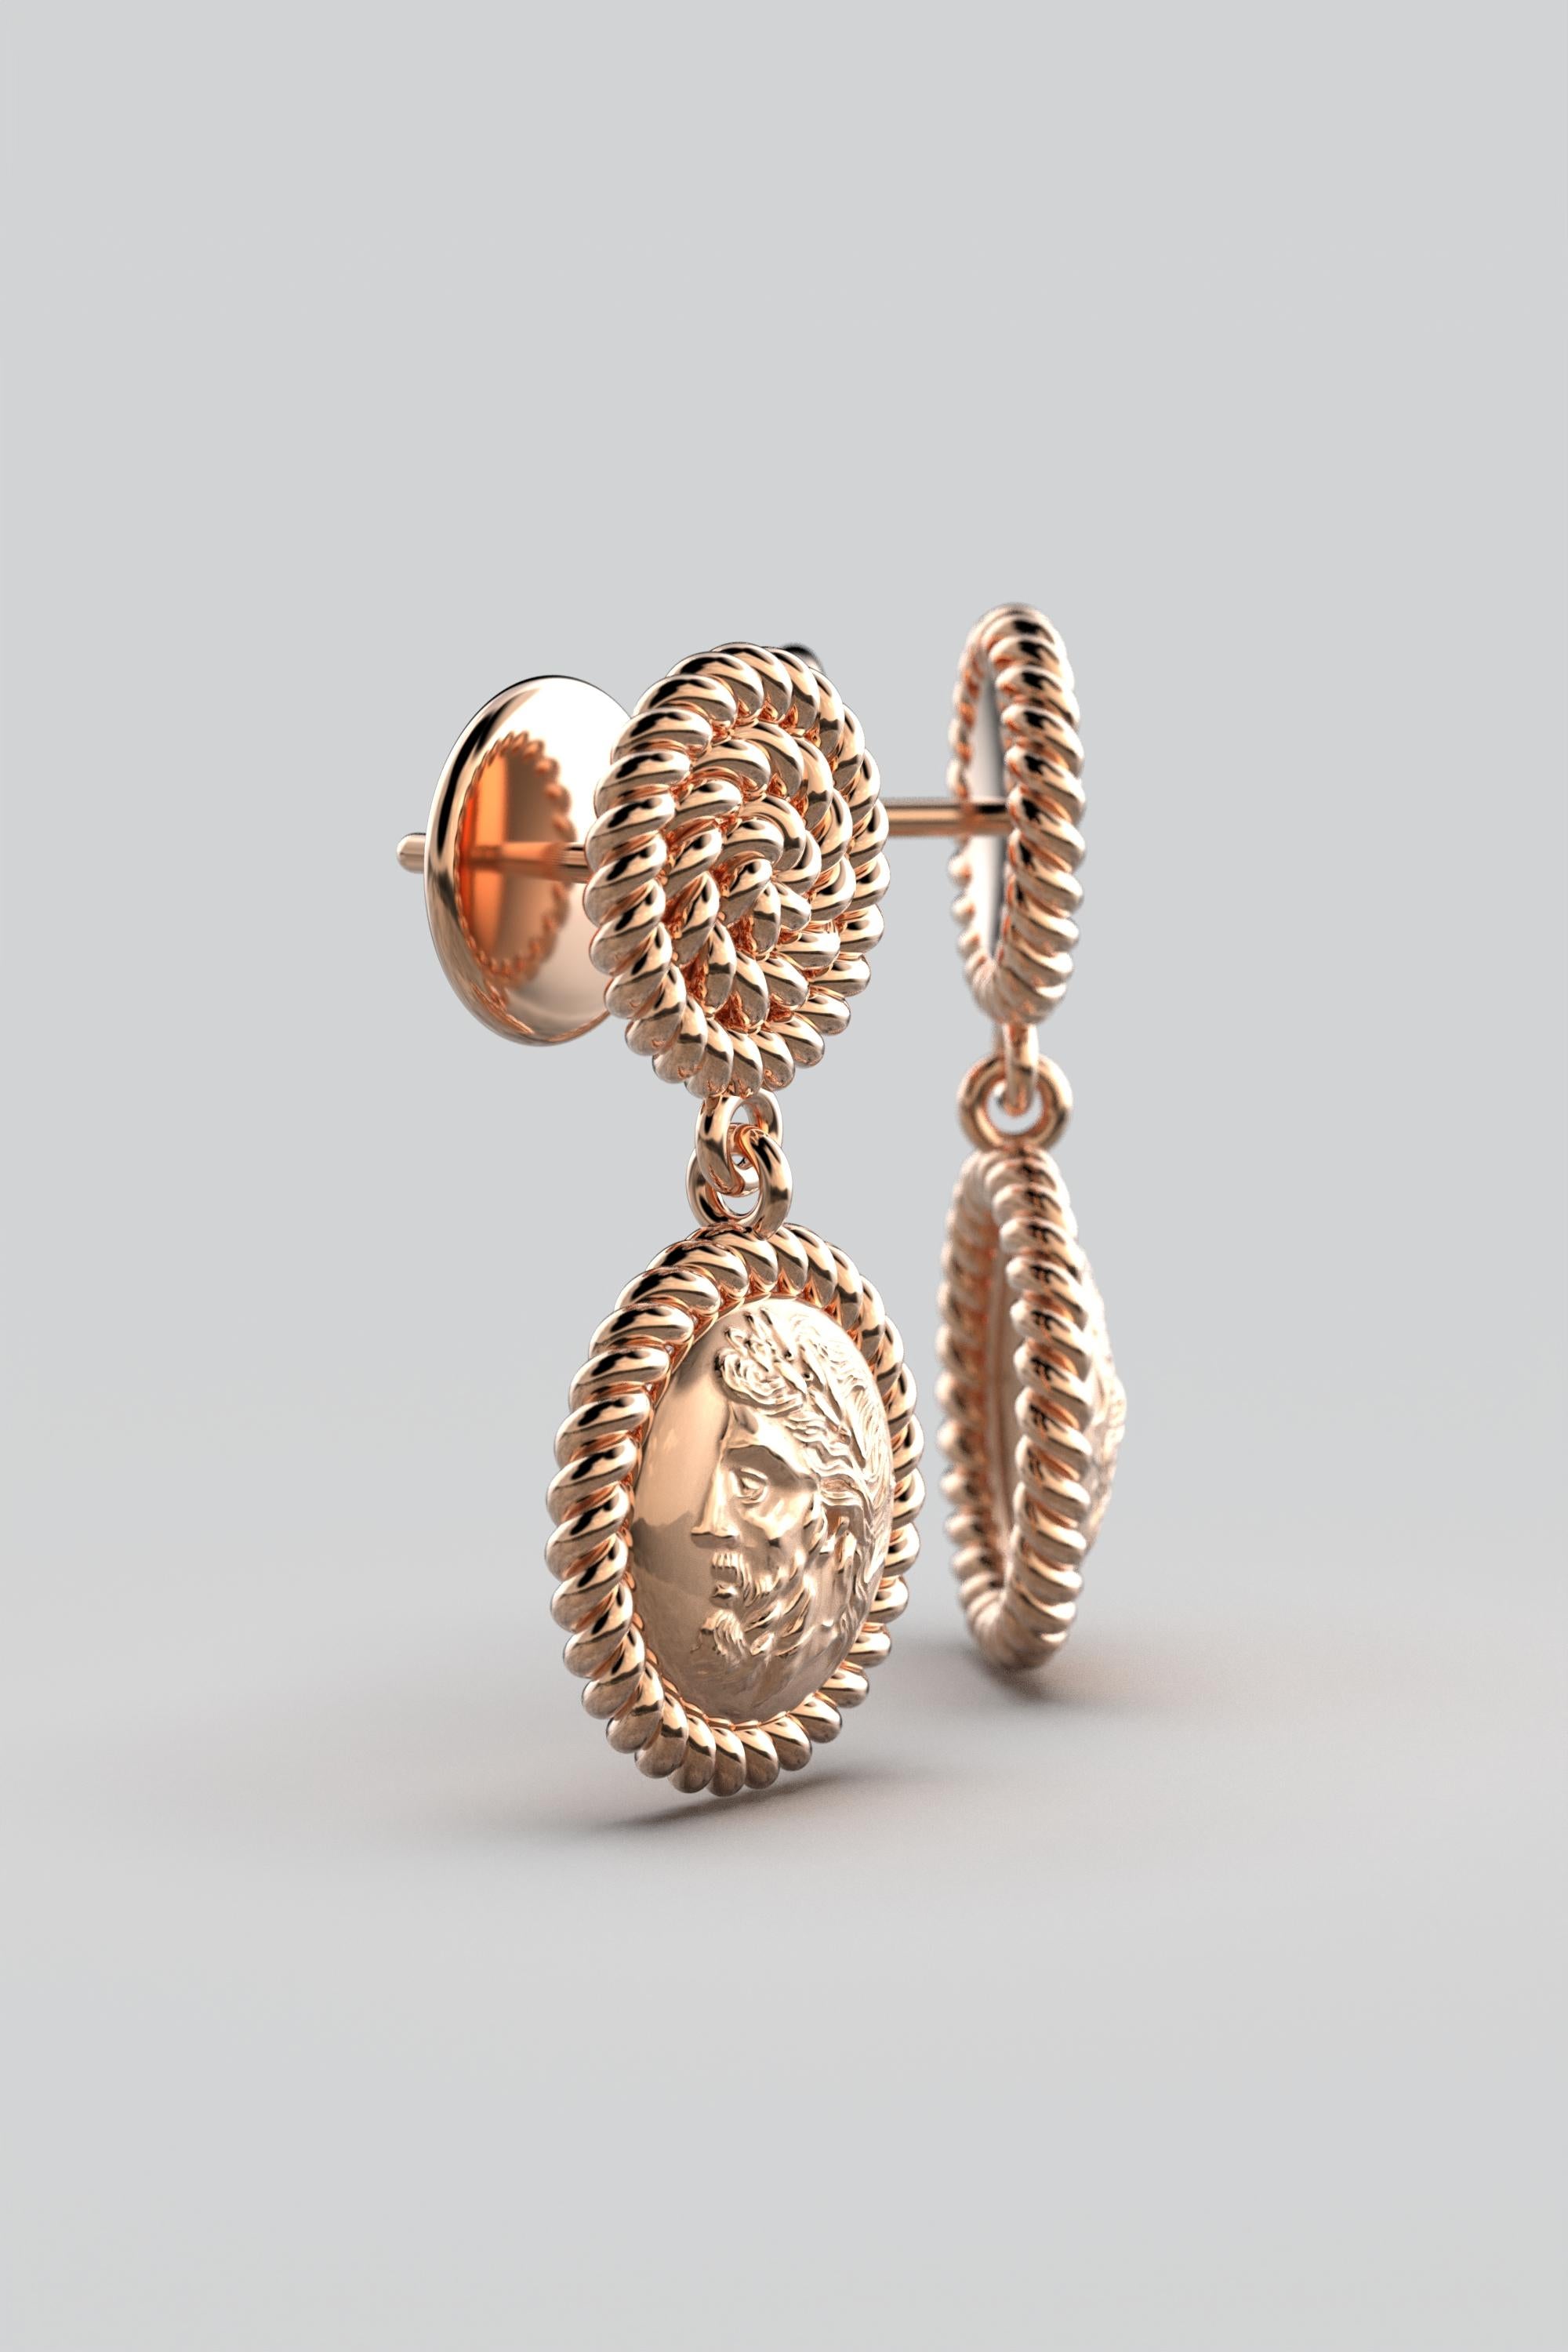 Dangle Earrings in 18k solid Gold, Ancient Greek Style, Zeus Coin Earrings For Sale 6